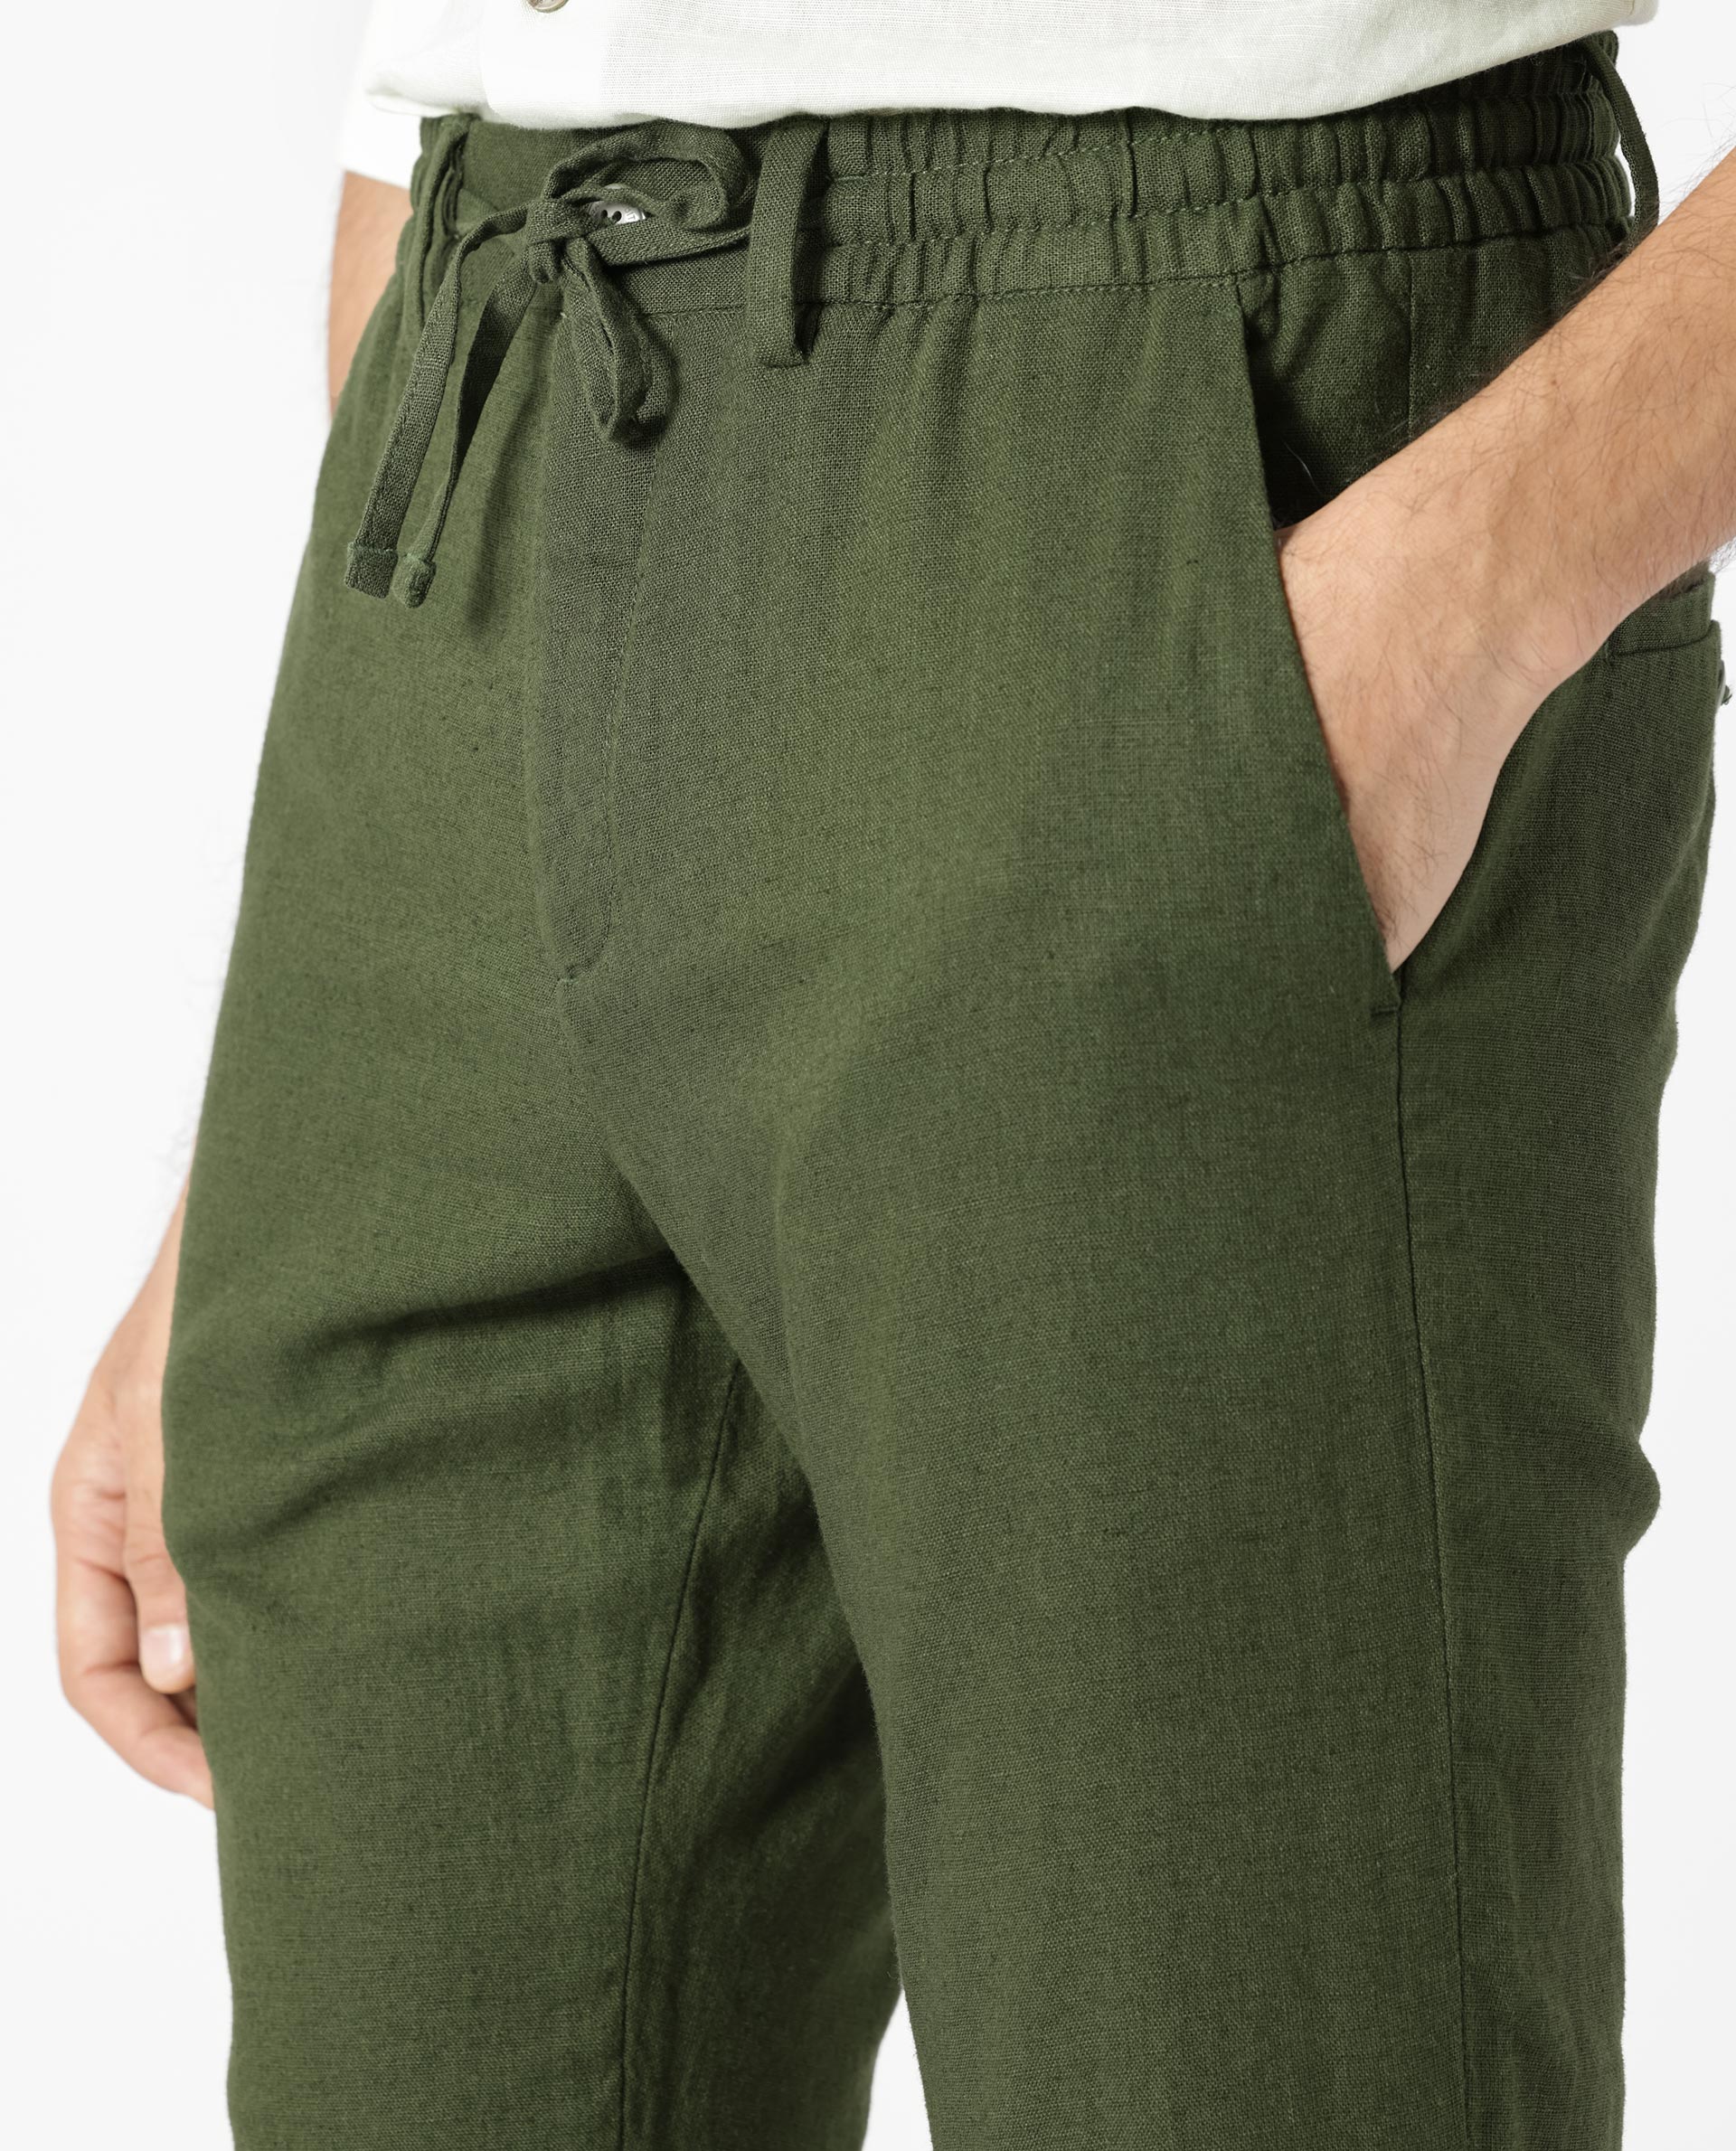 Trunk Sex|men's Open Crotch Pants - Quick Unfix Trousers For In-car Sex &  Outdoor